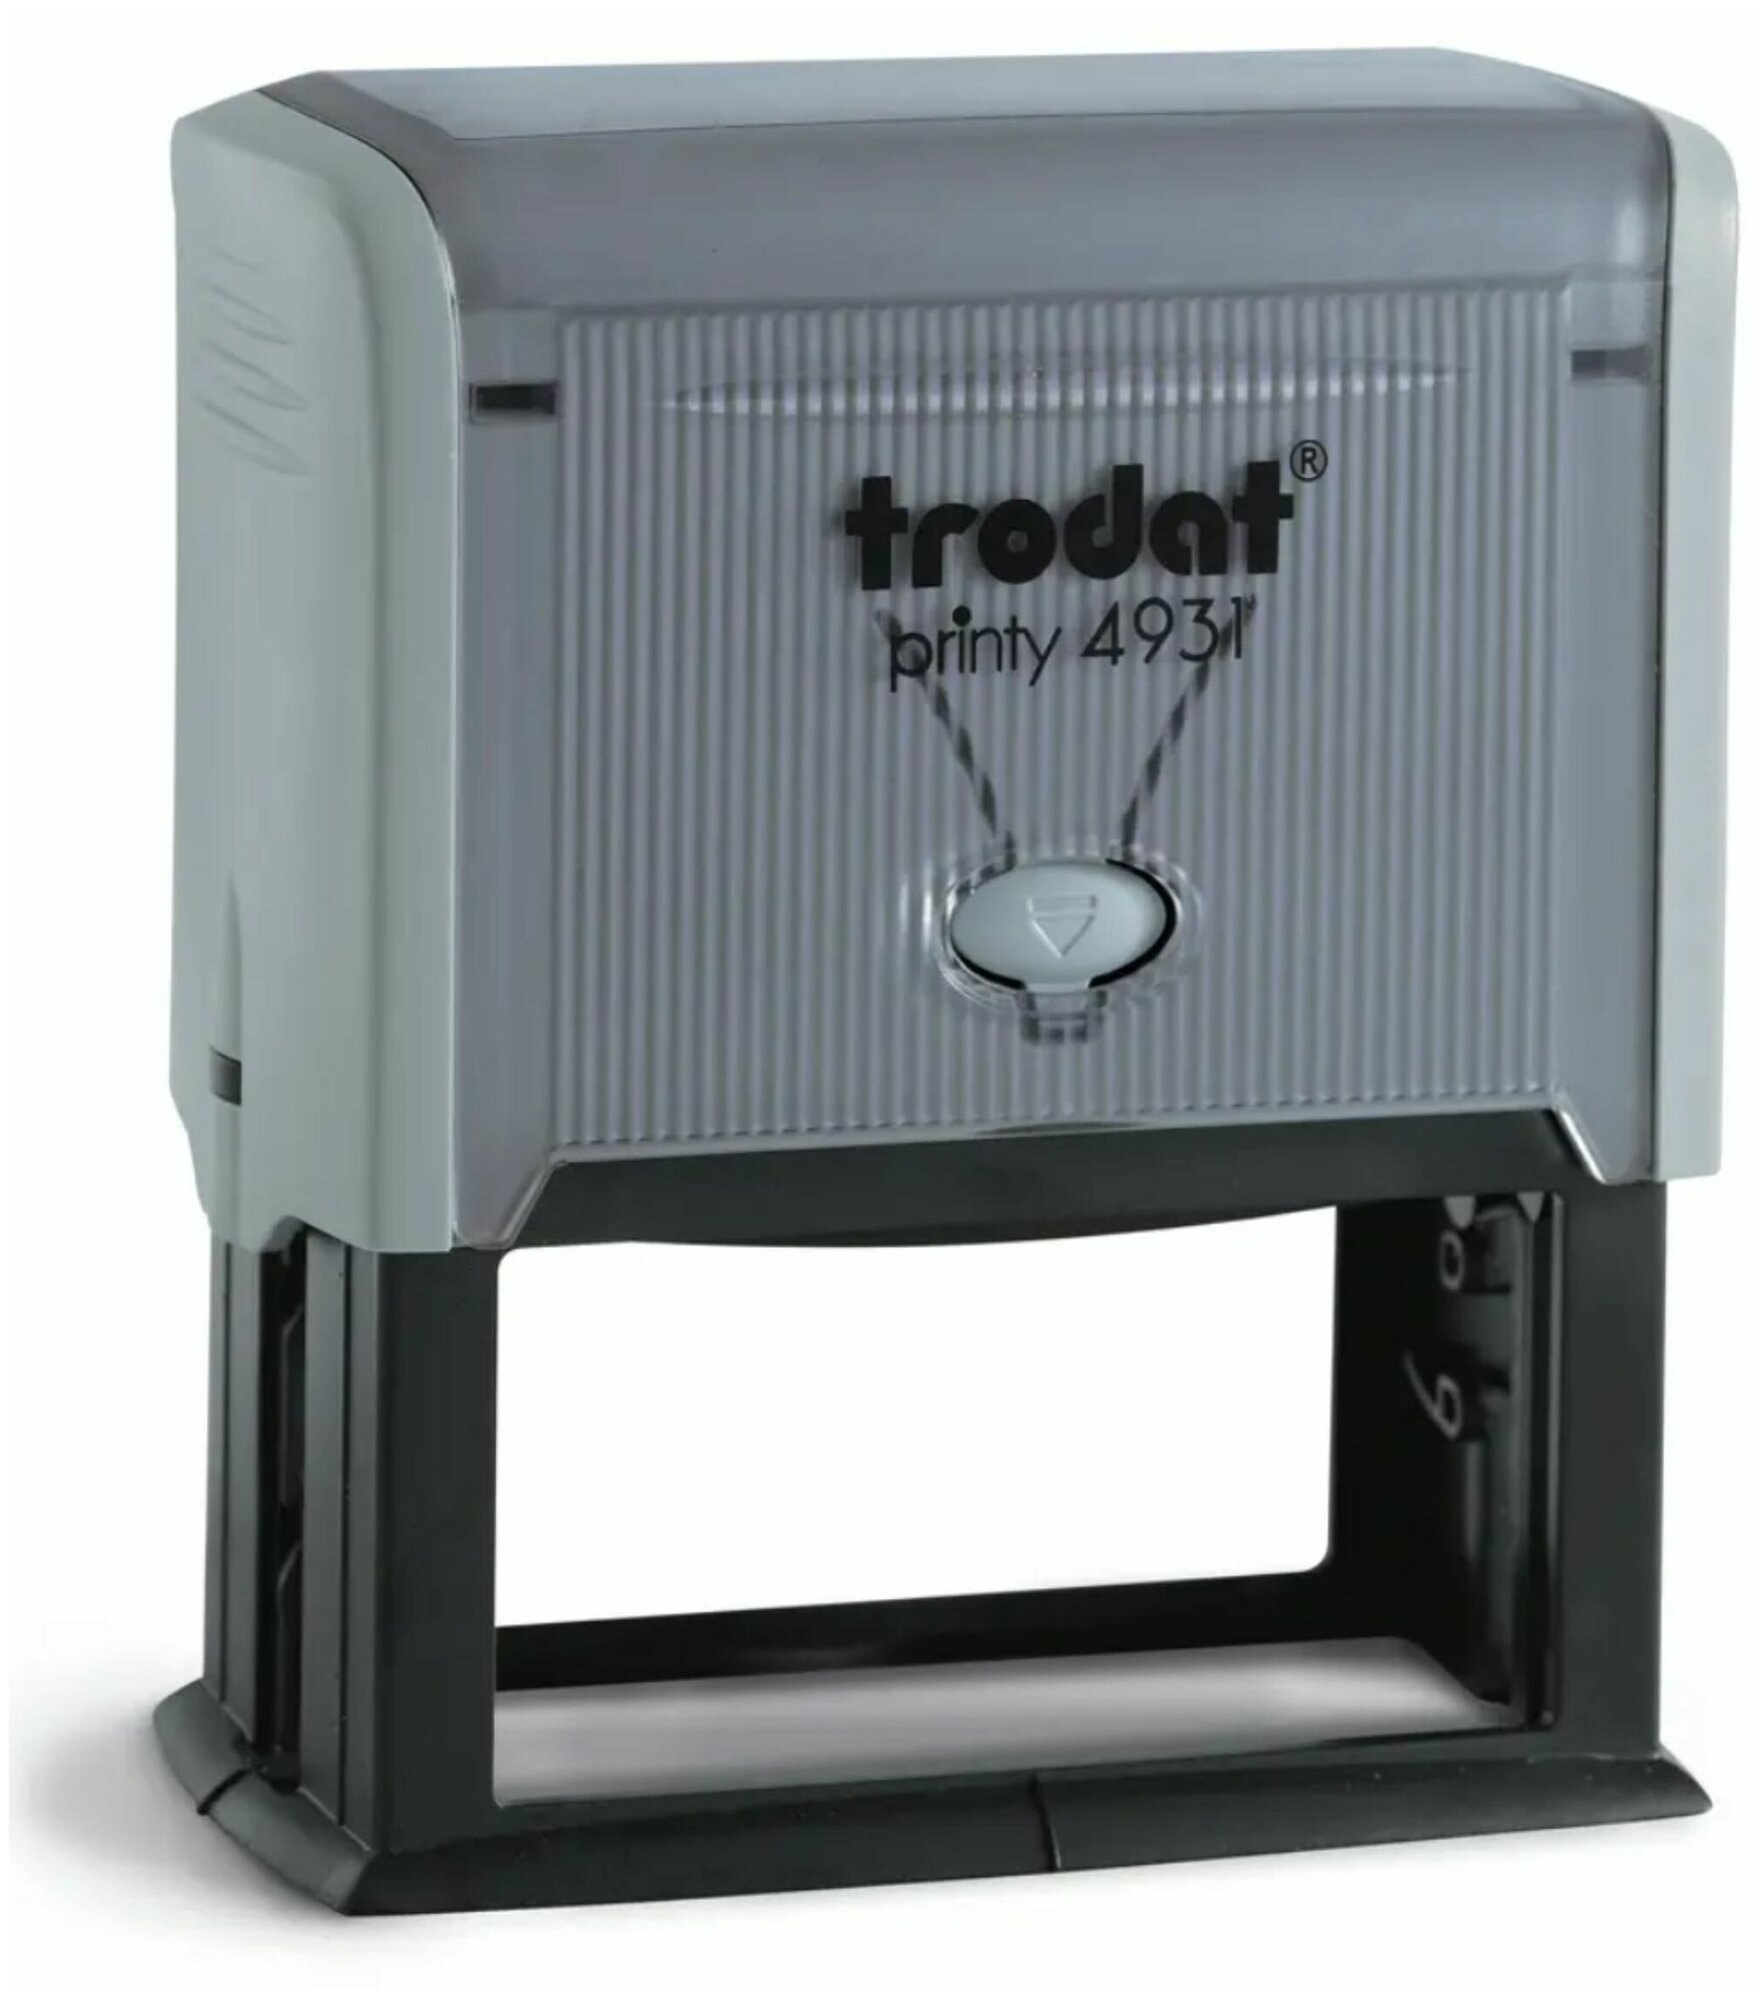 Оснастка Trodat Printy 4931 для печати штампа факсимиле. Поле: 70х30 мм.